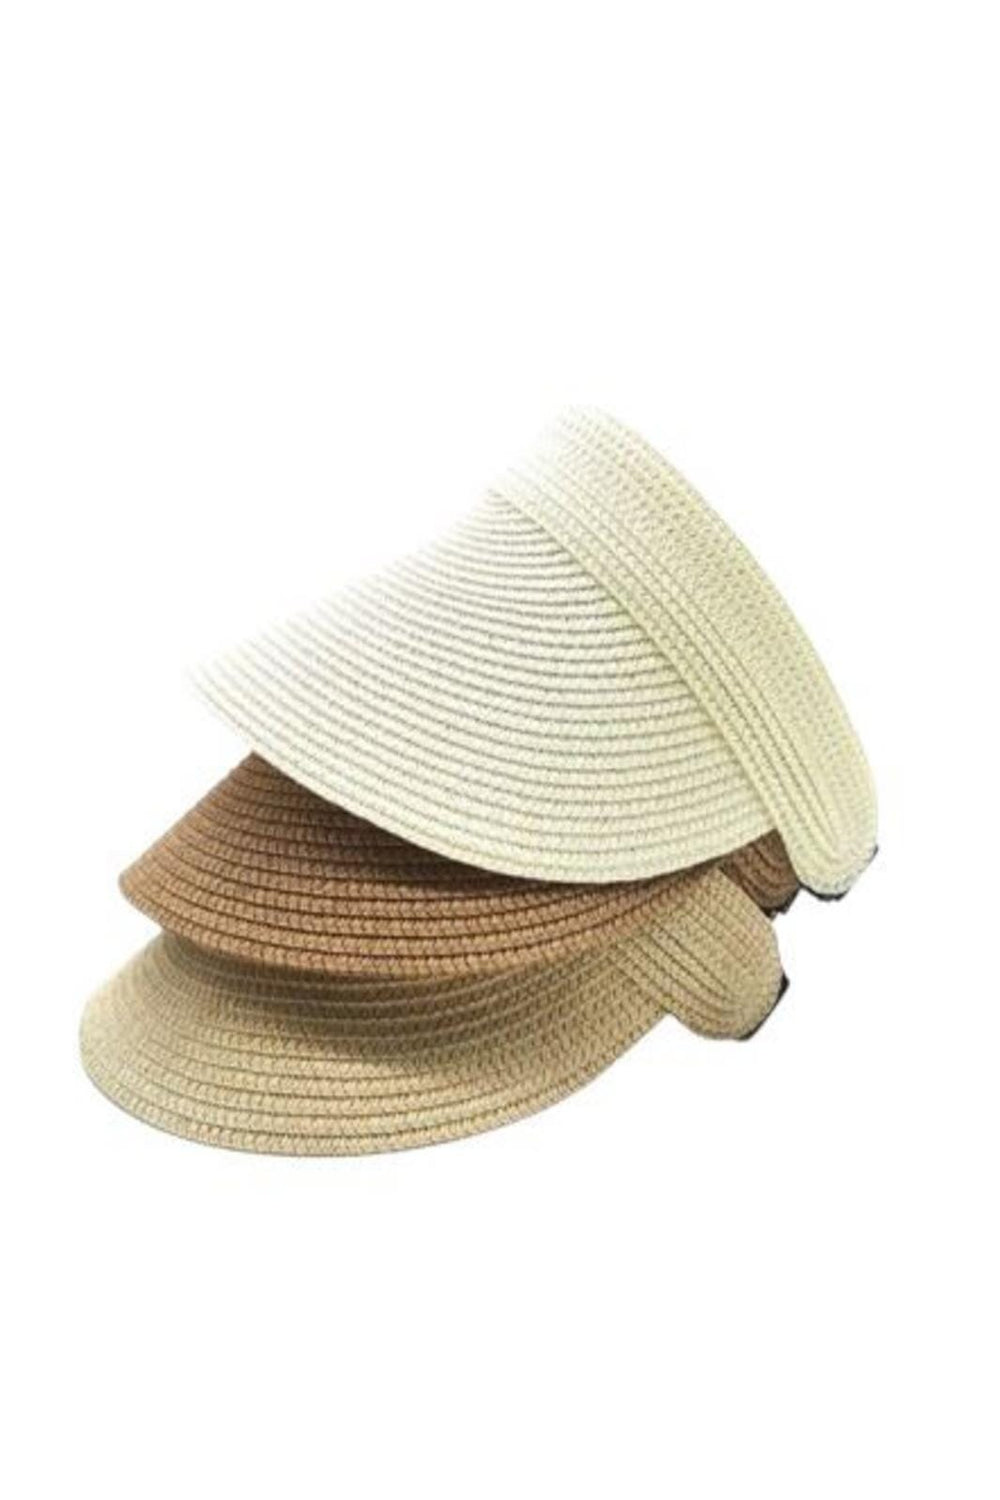 Anobel Copenhagen - Visor Straw Elastic Hat Xm3090 - Brown Hatte 